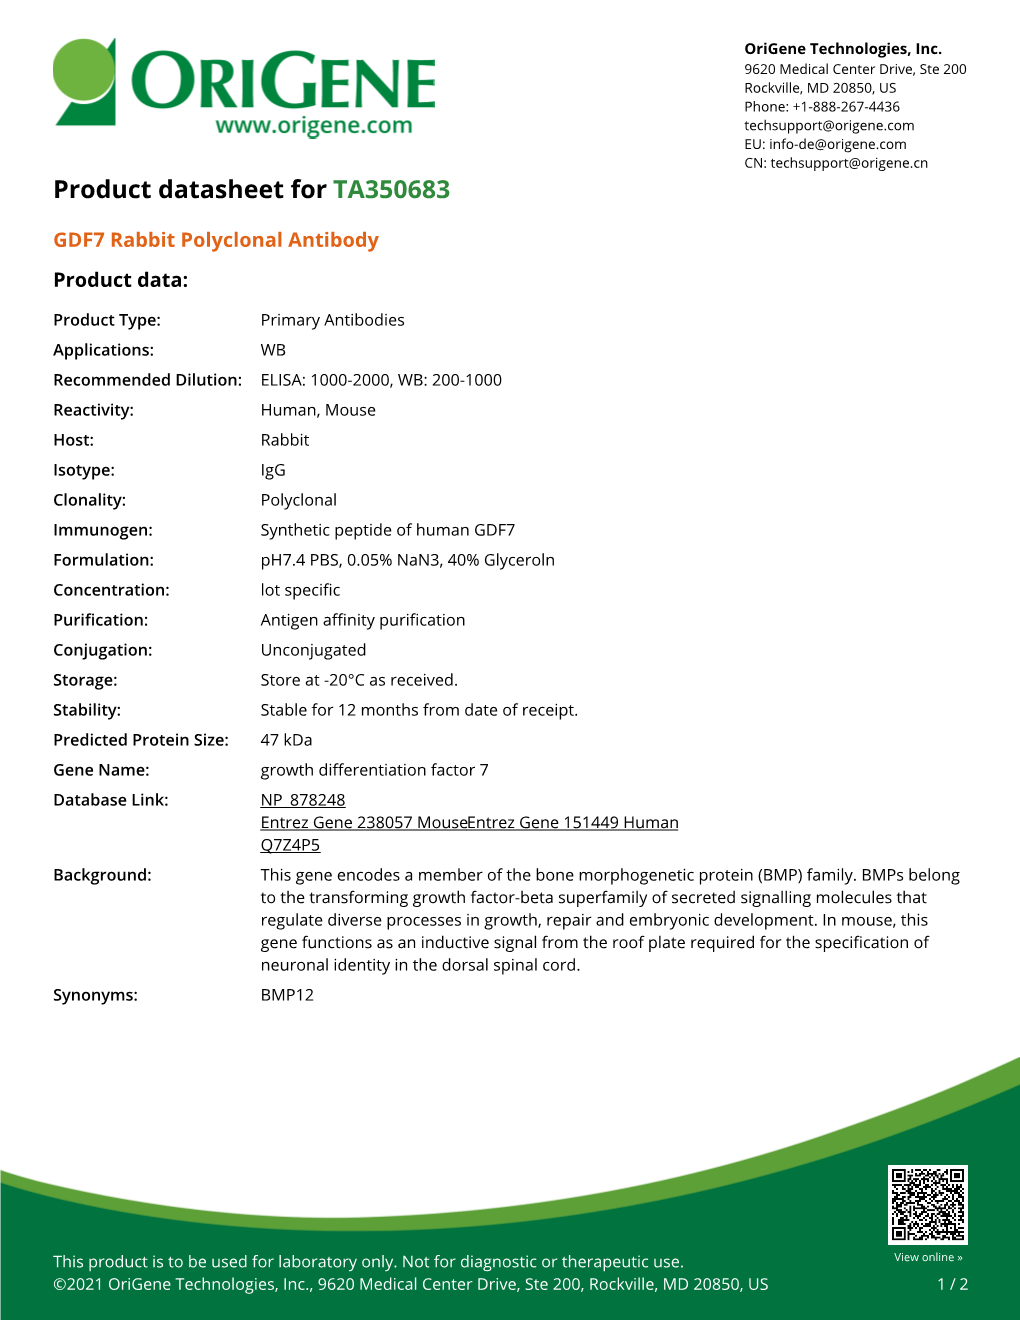 GDF7 Rabbit Polyclonal Antibody – TA350683 | Origene